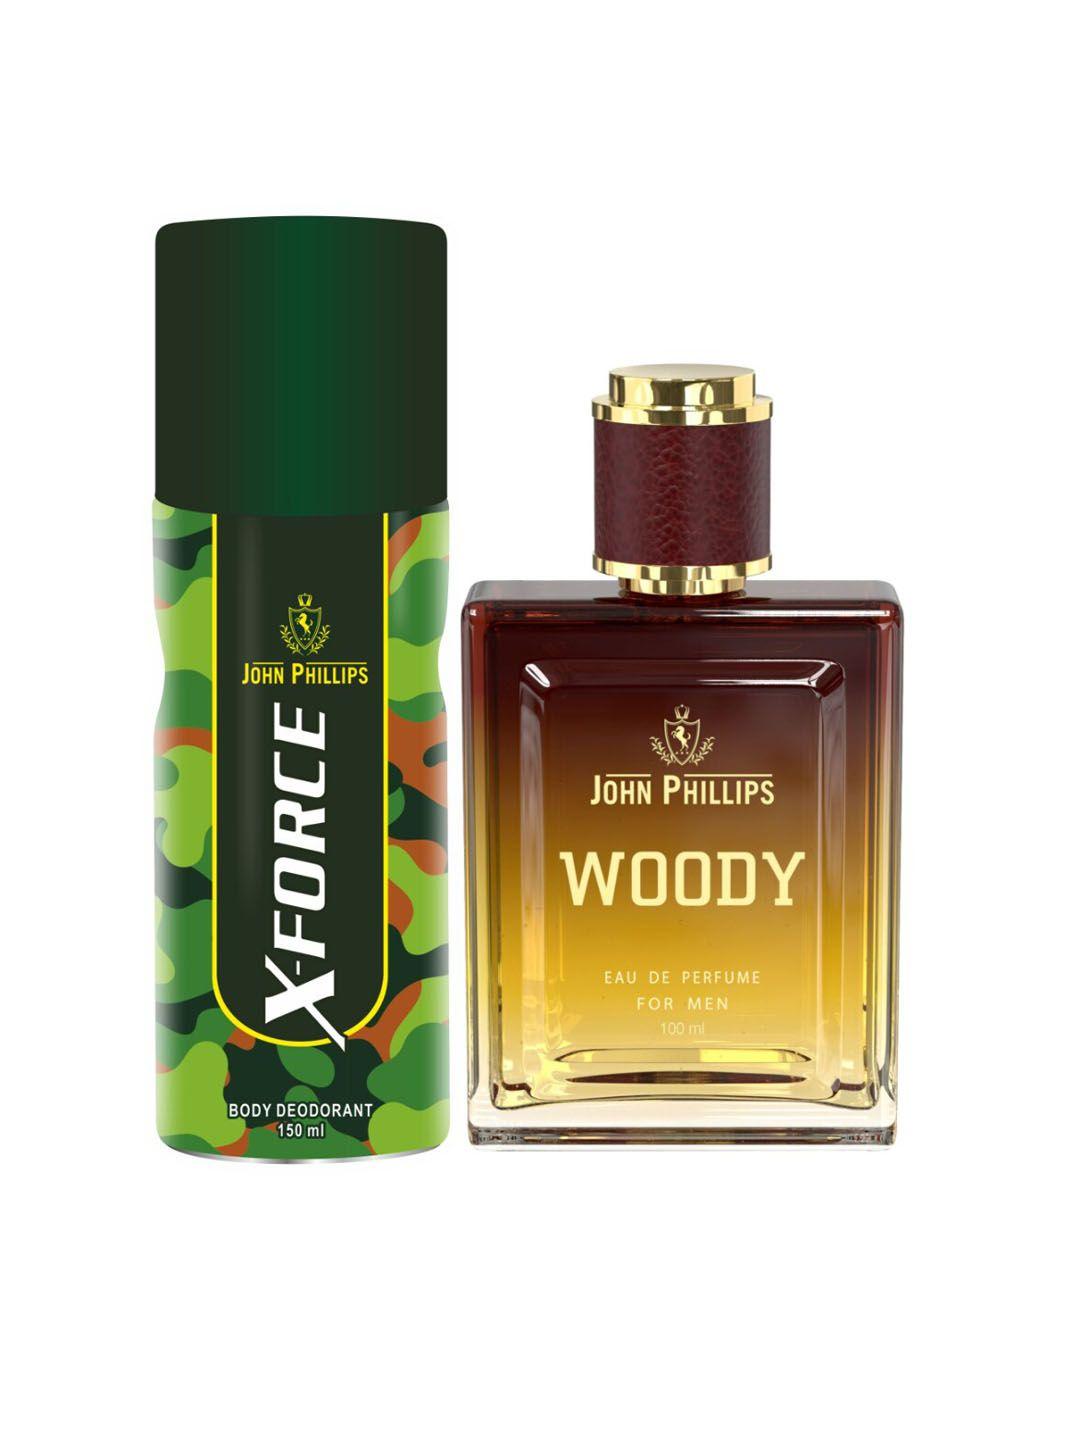 john phillips set of x-force deodorant 150 ml + woody eau de parfum 100 ml